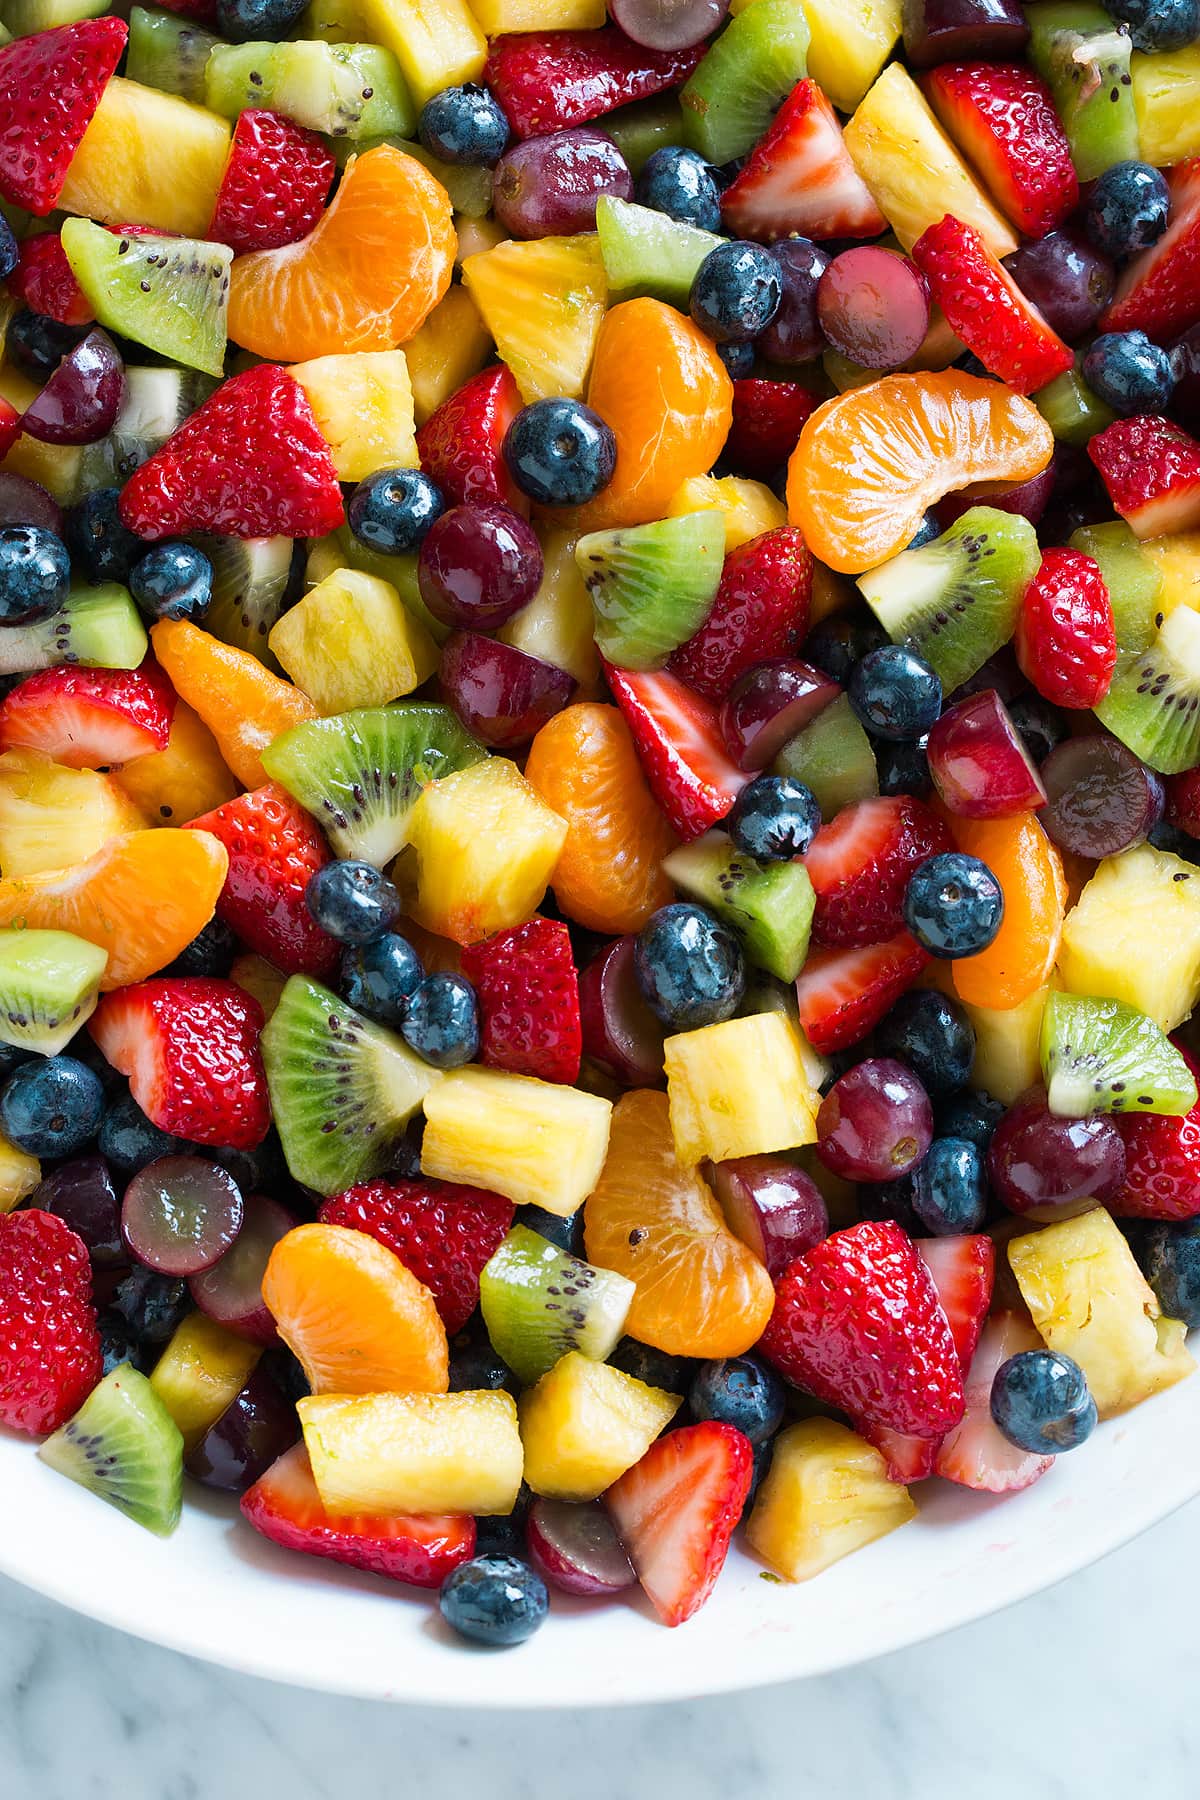 Close-up image of fruit salad.